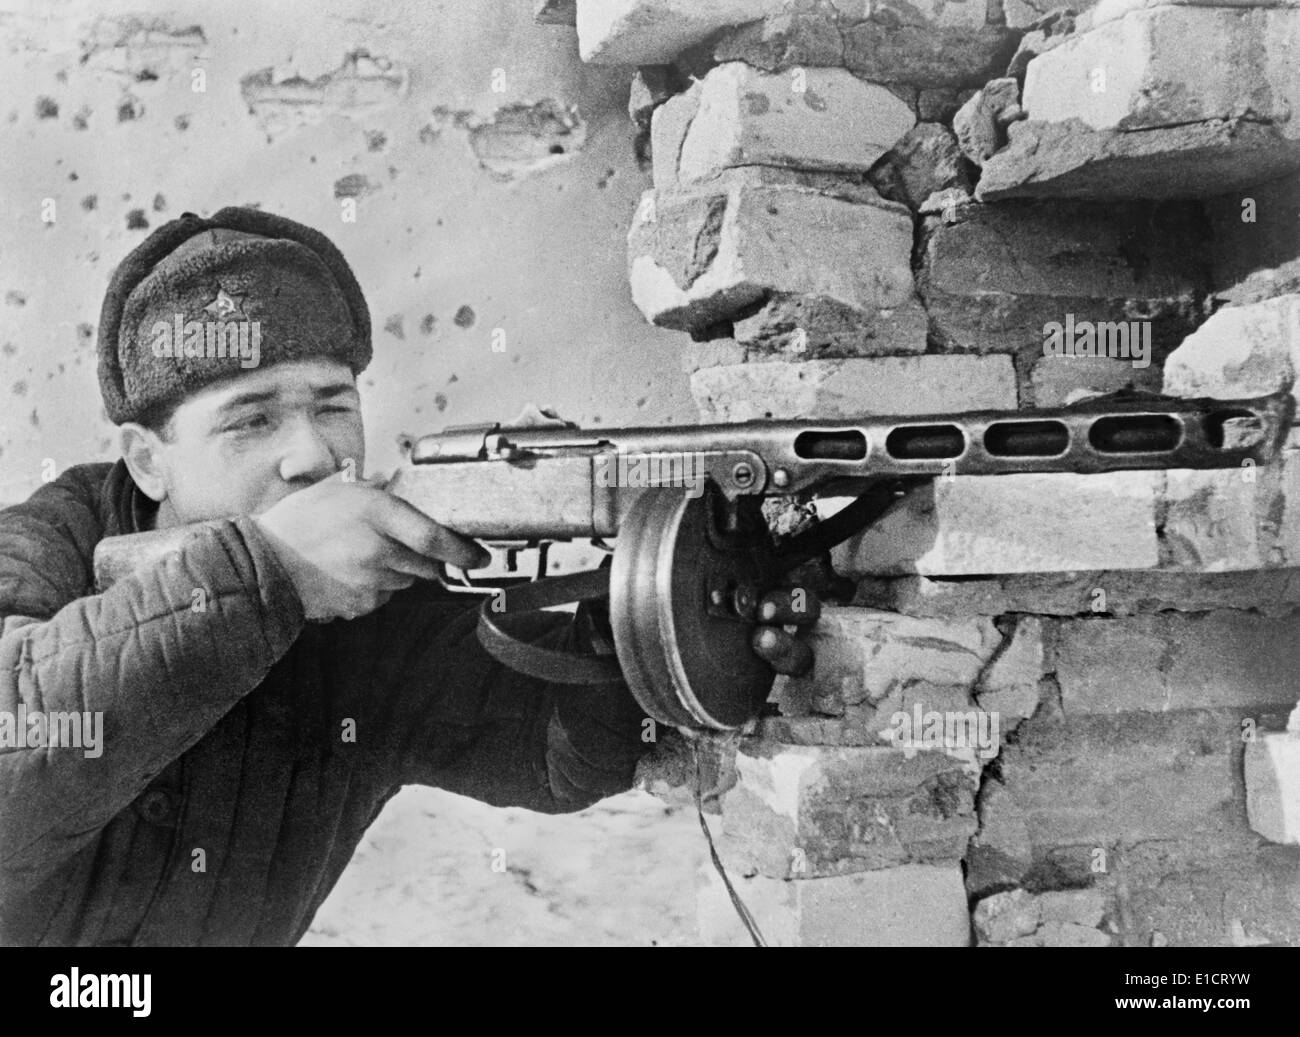 Battle for Stalingrad, World War 2. Red Army machine gunner bullet pocked wall. Oct. 1942-Feb. 1943. Photo by Georgii Zelma. Stock Photo